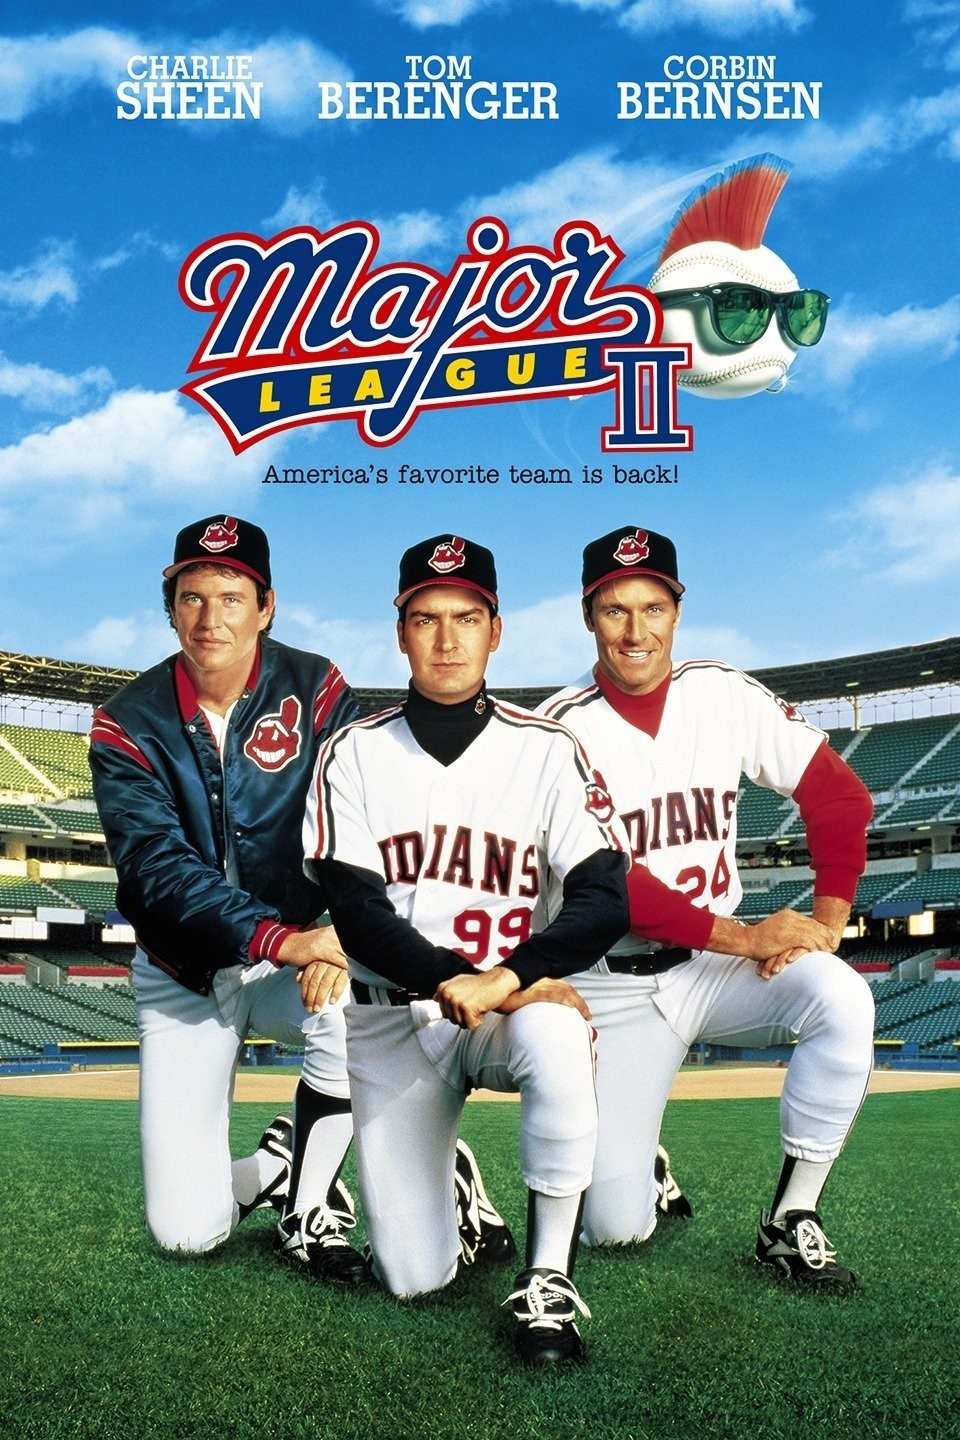 1994 Major League Baseball All-Star Game